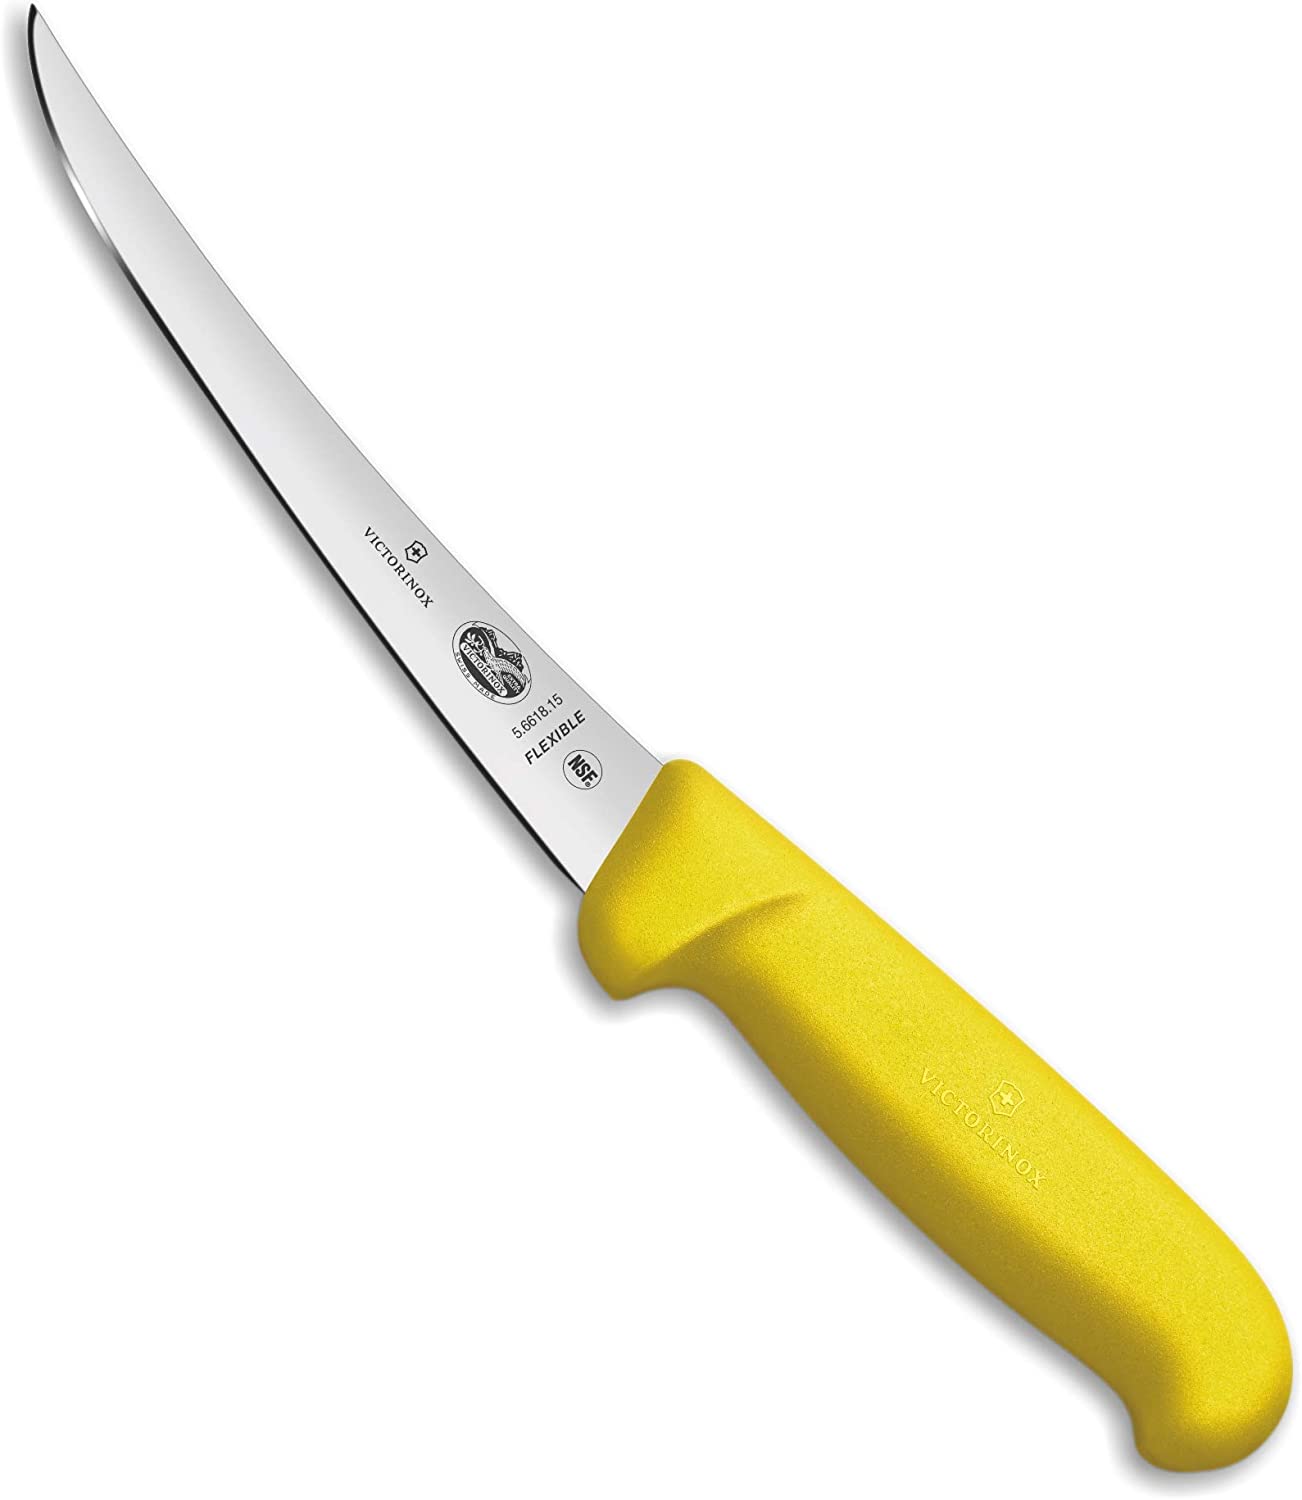 Victorinox Fibrox Boning Knife, Swissmade, 15 cm Curved, Narrow, Flexible Blade, Non-Slip, Rustproof, Yellow